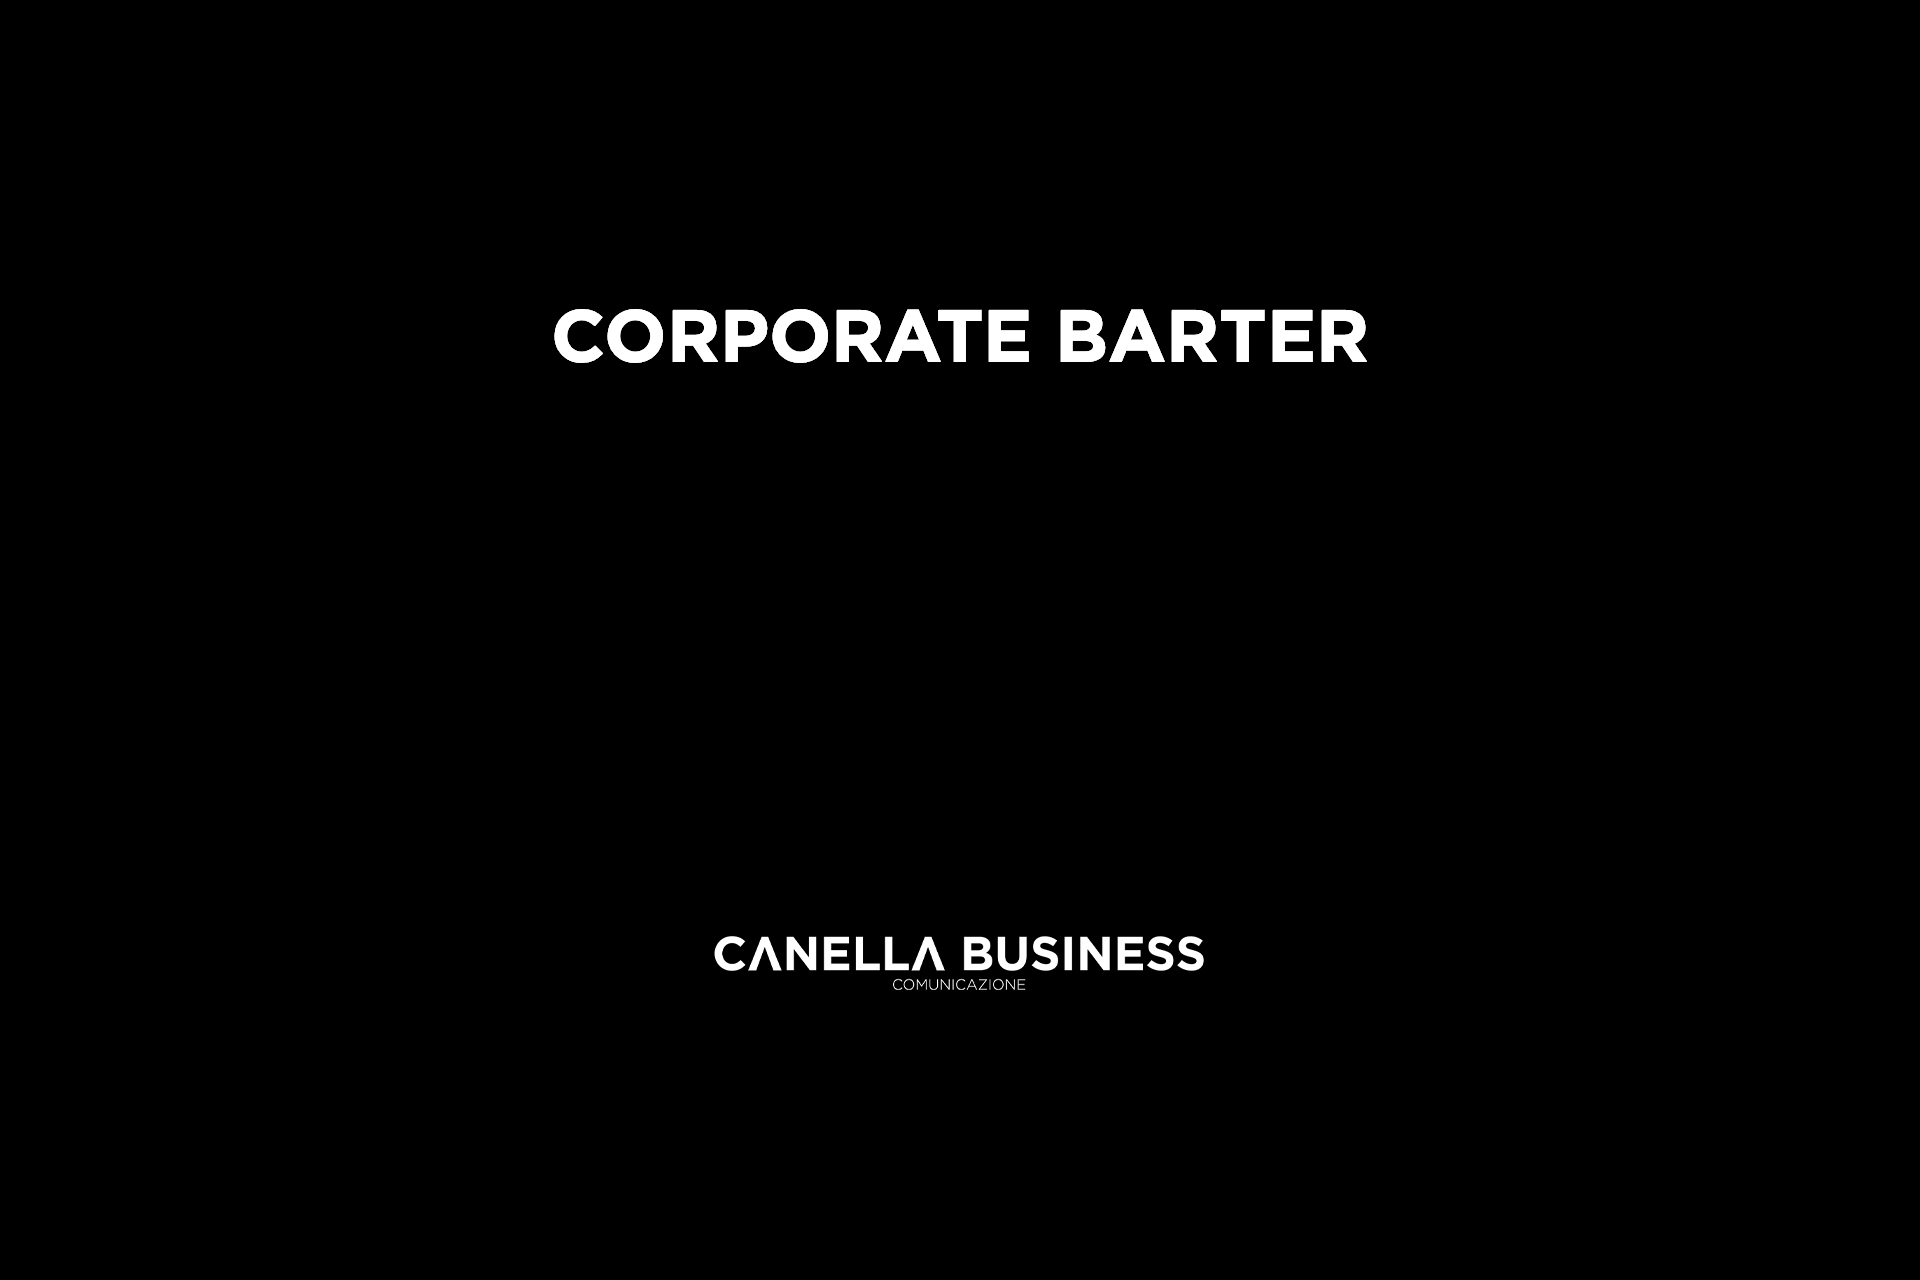 Corporate Barter